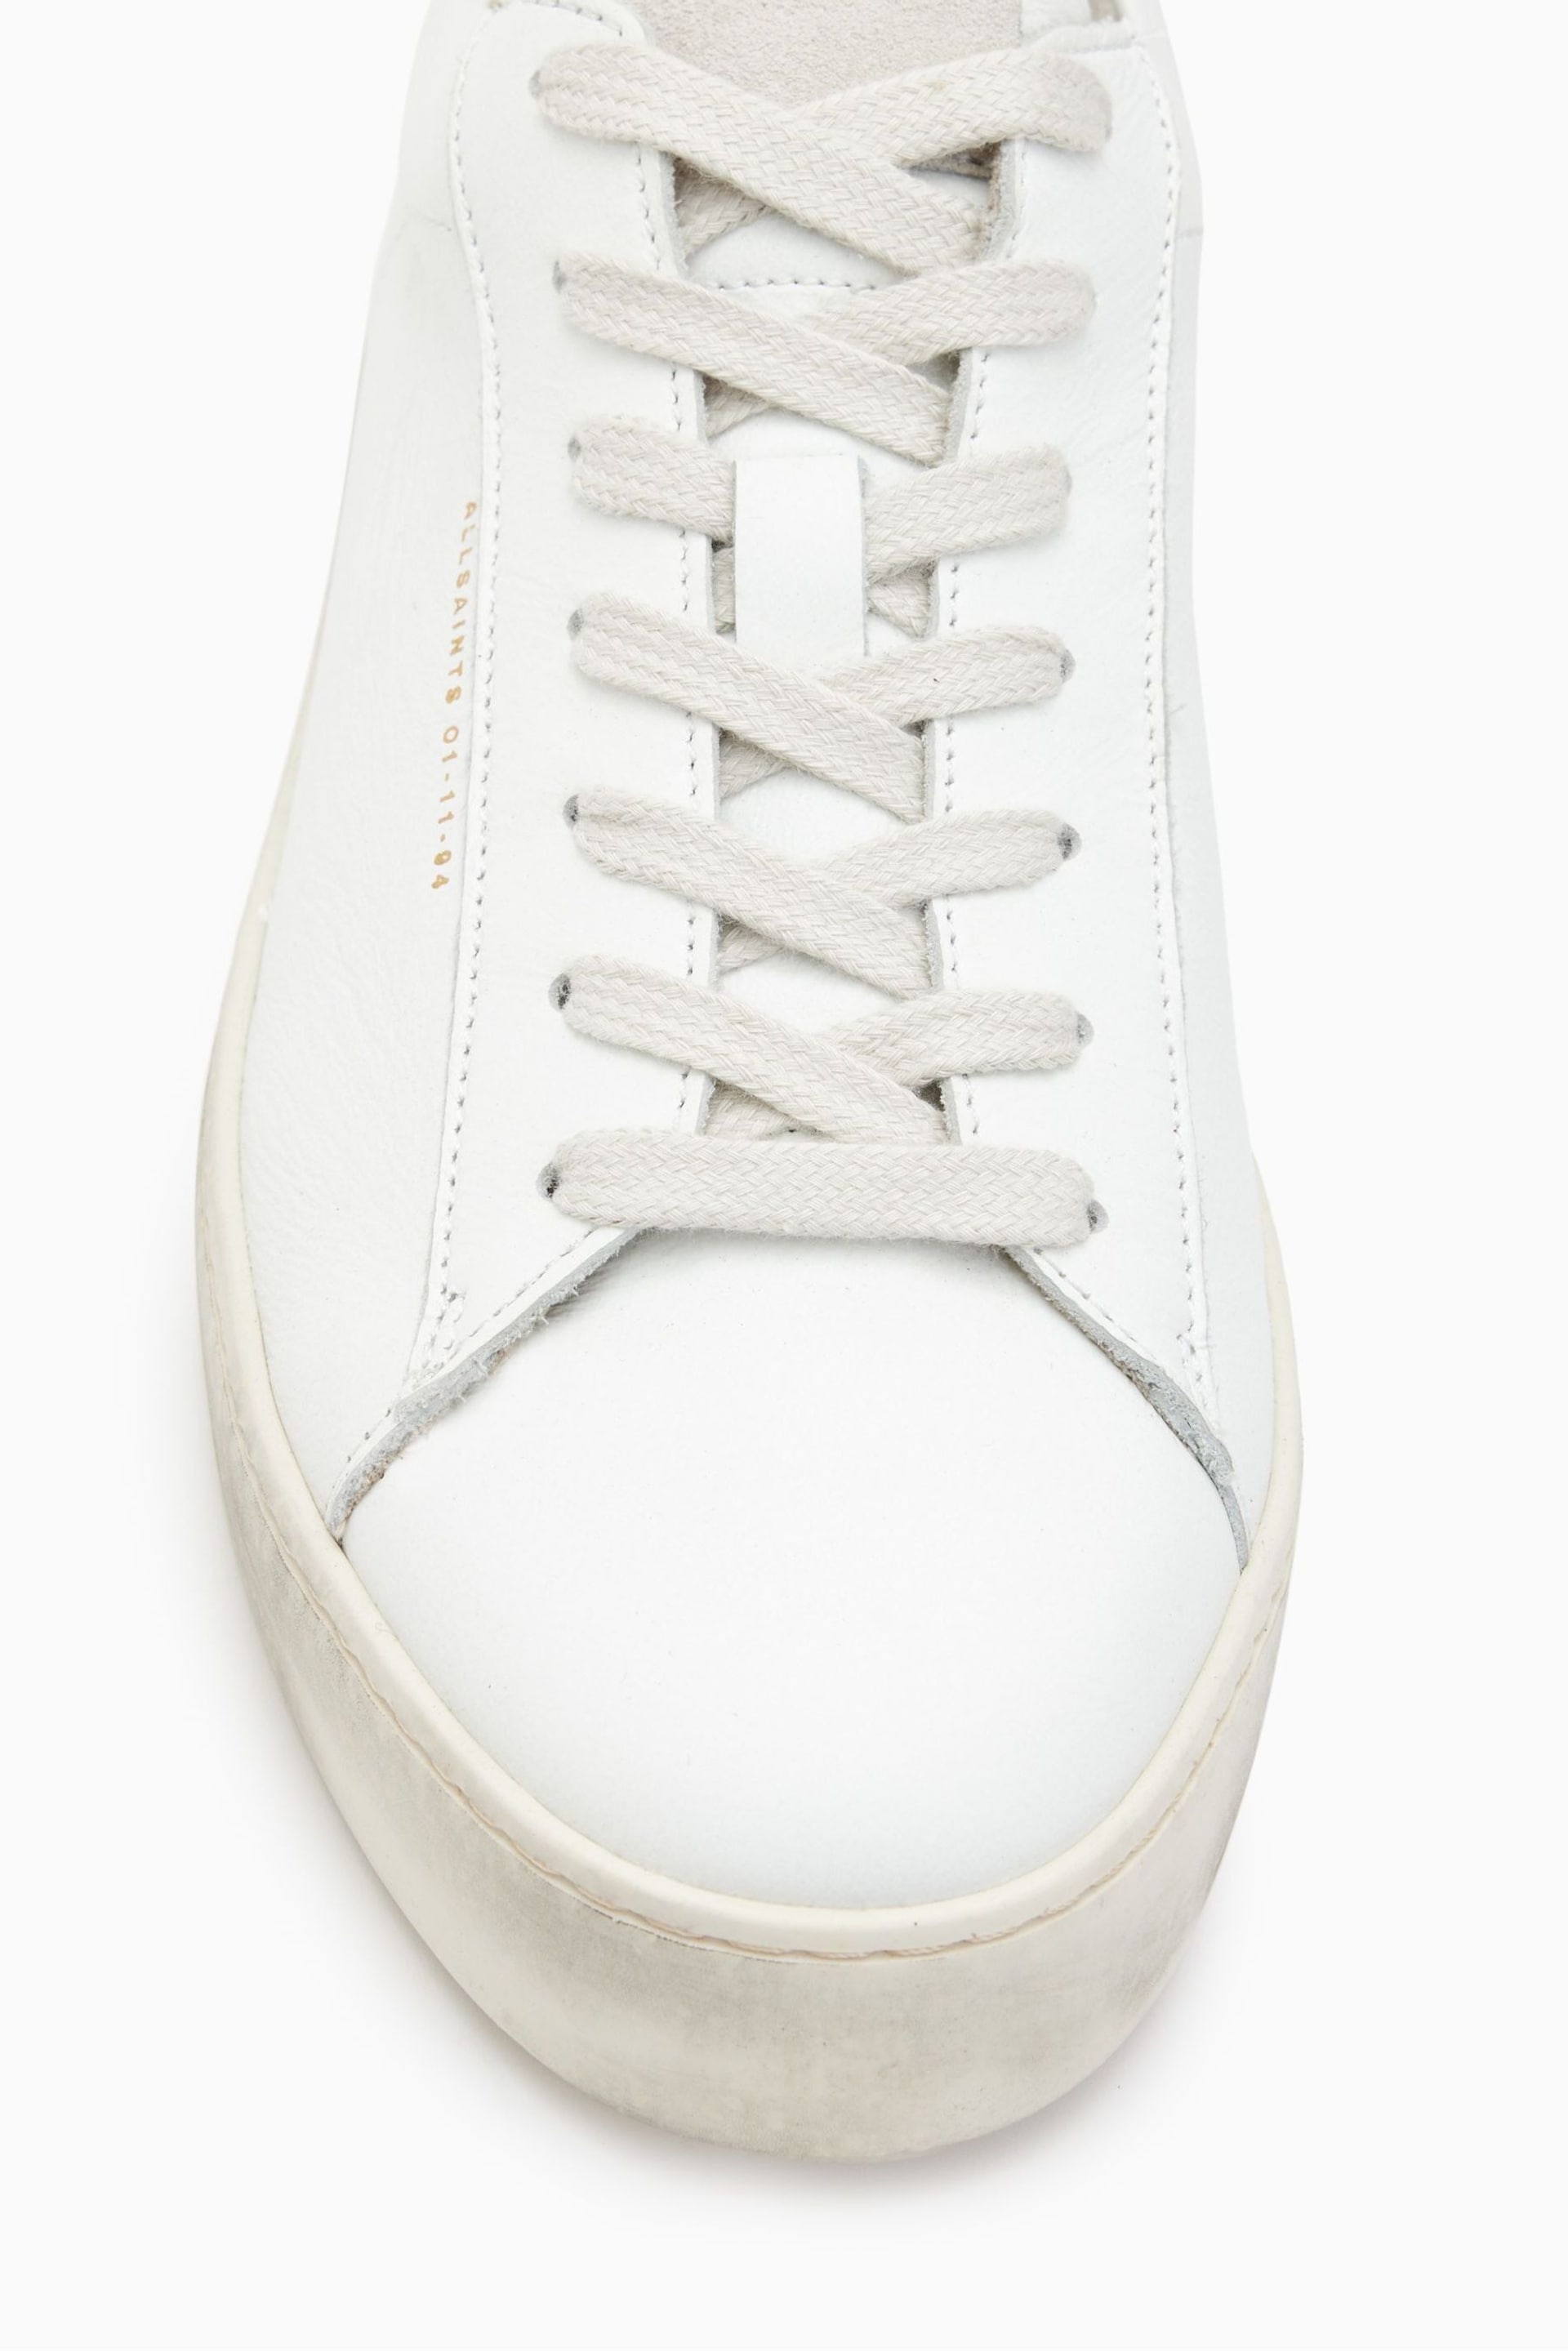 AllSaints White Shana Sneakers - Image 4 of 7